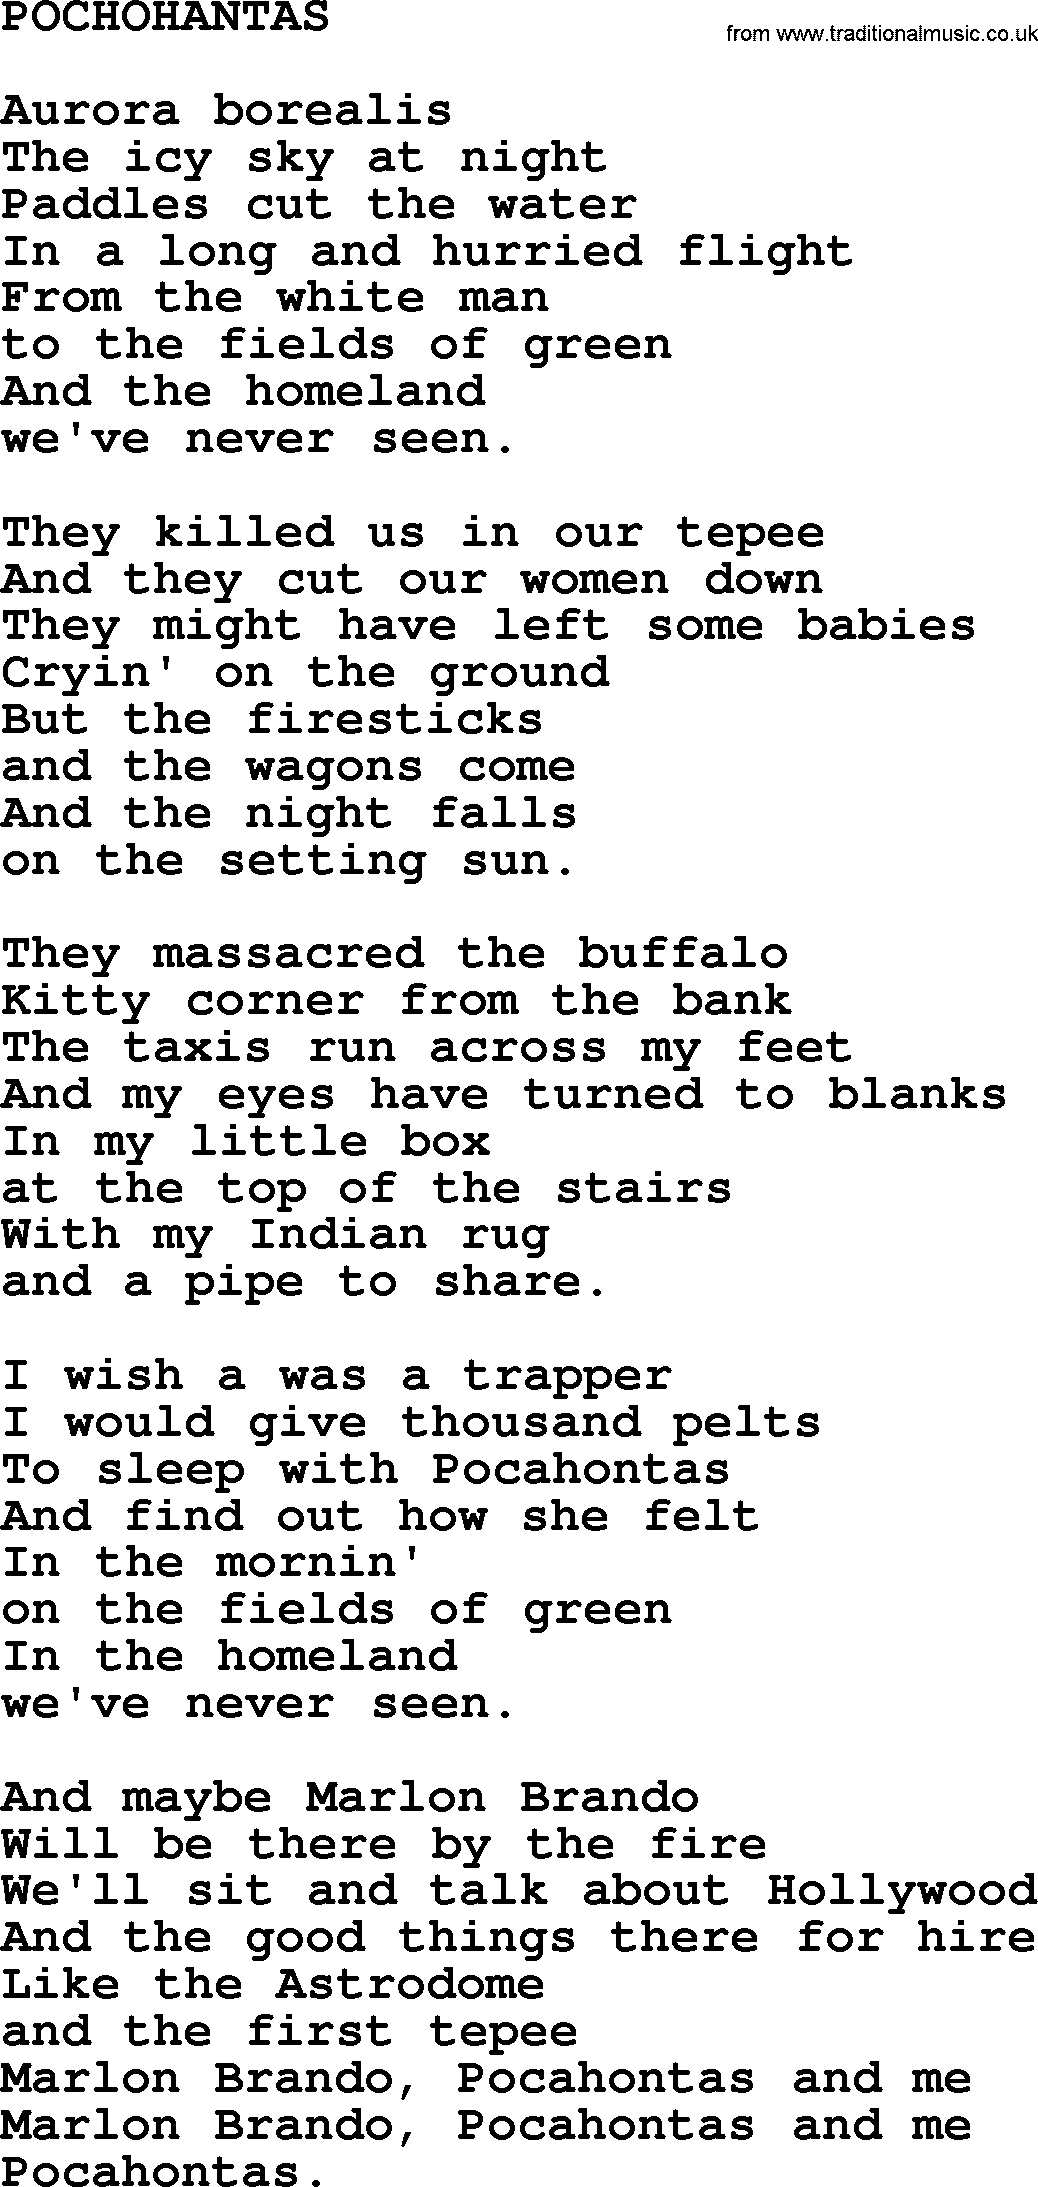 Johnny Cash song Pochohantas.txt lyrics